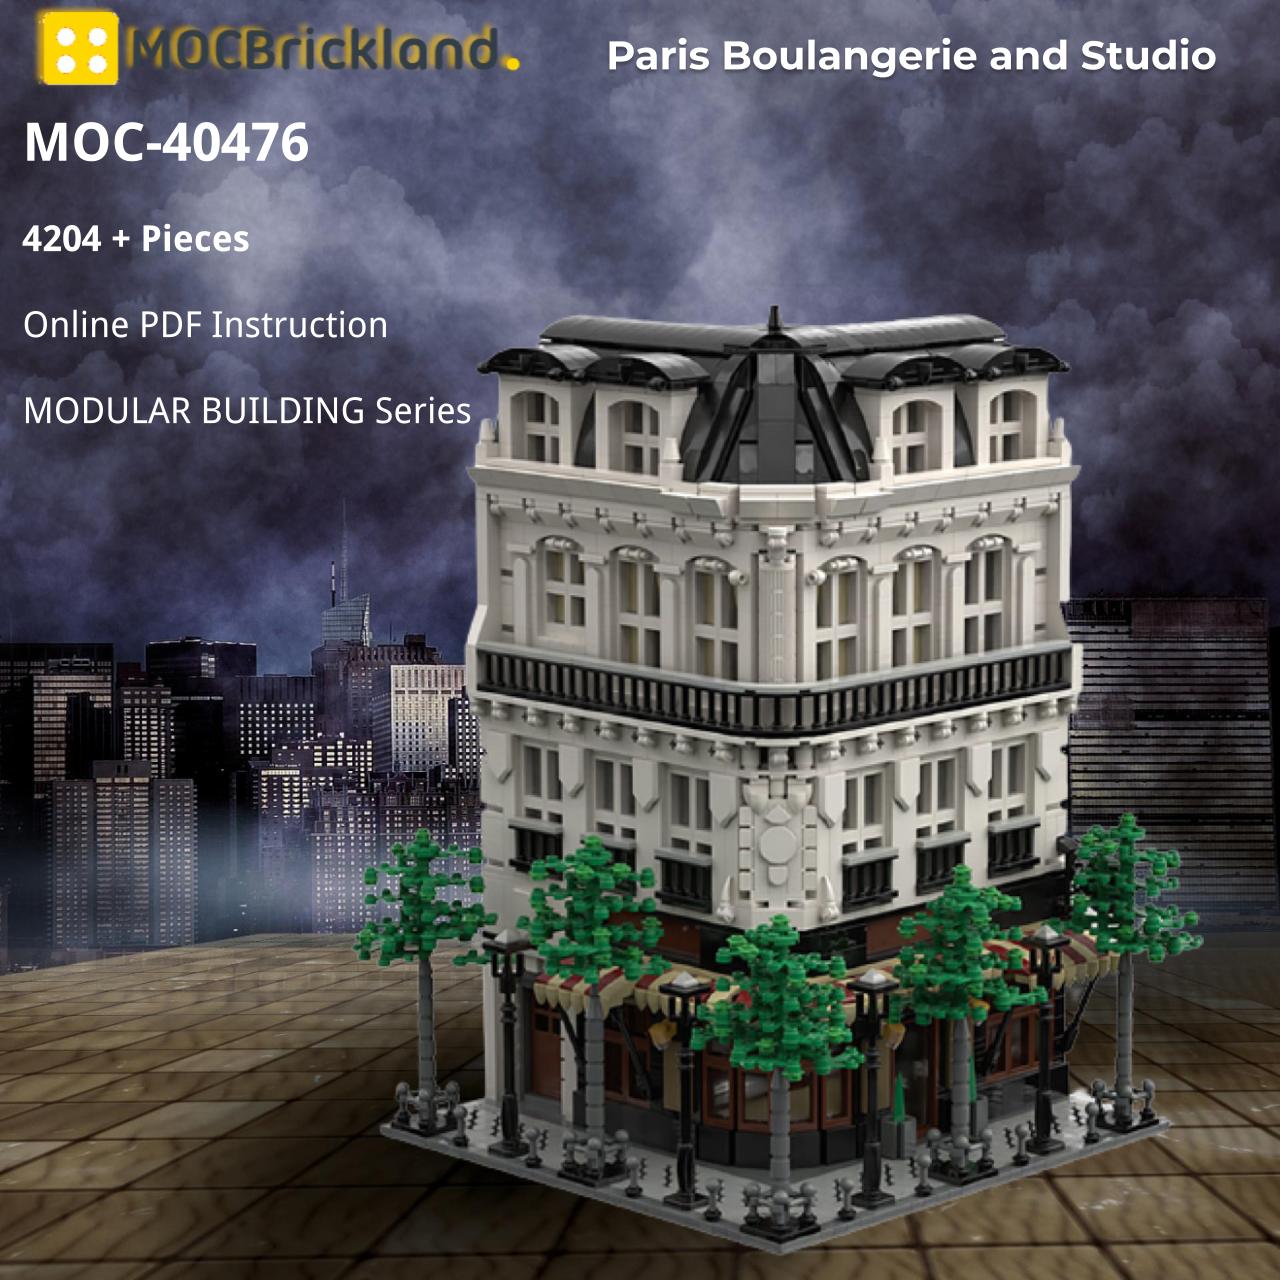 MODULAR BUILDING MOC-40476 Paris Boulangerie and Studio MOCBRICKLAND